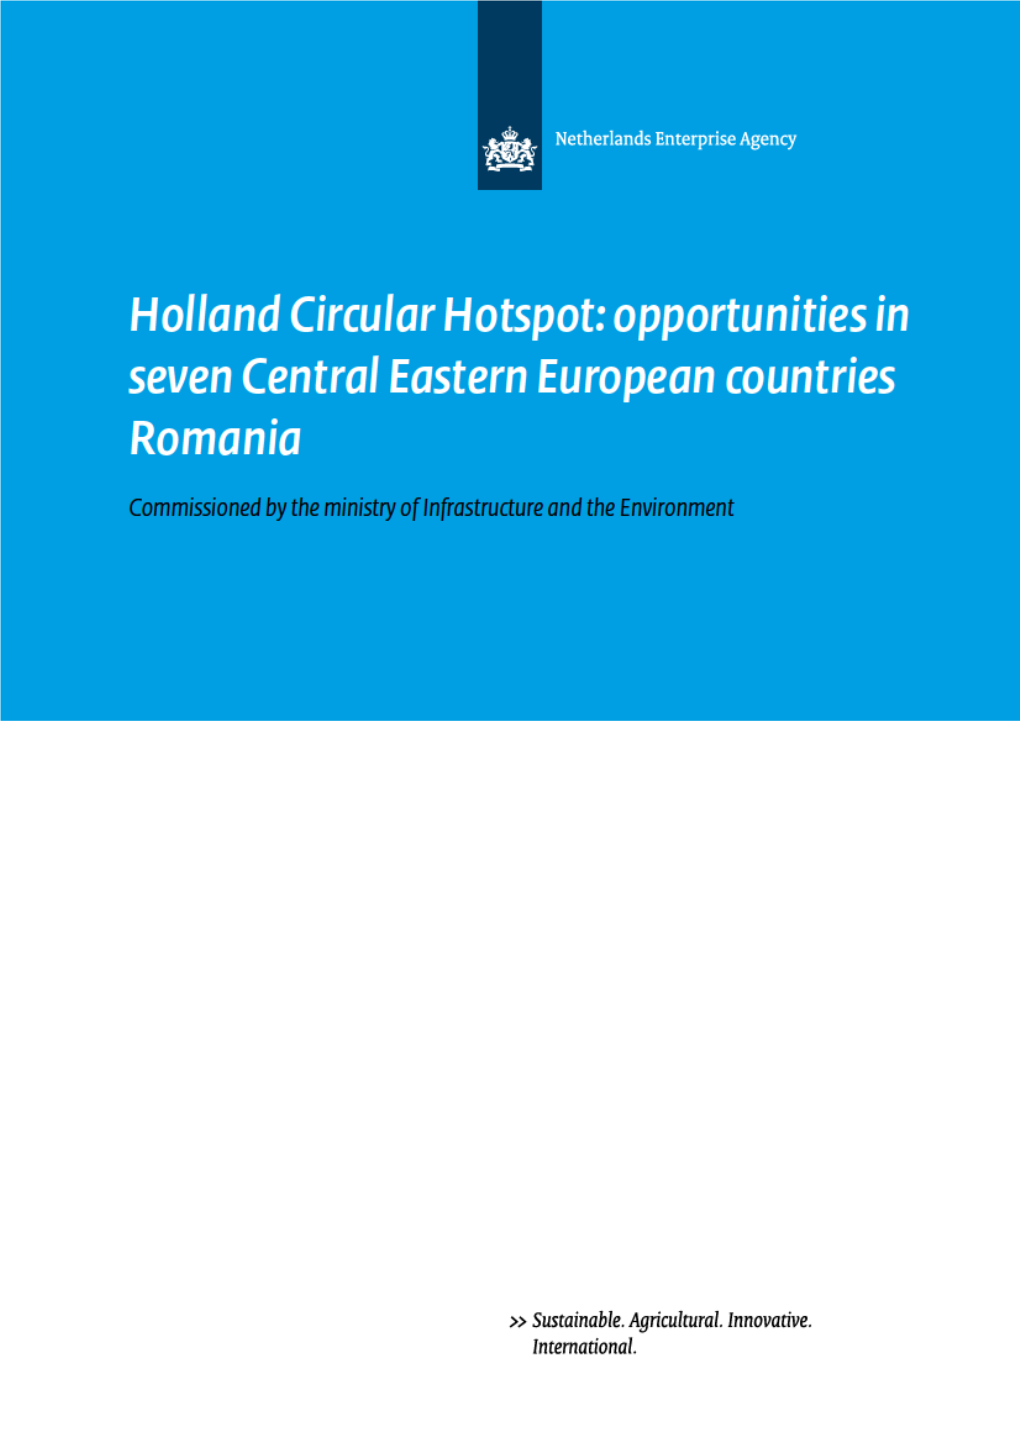 Holland Circular Hotspot: Opportunities in Seven Central Eastern European Countries